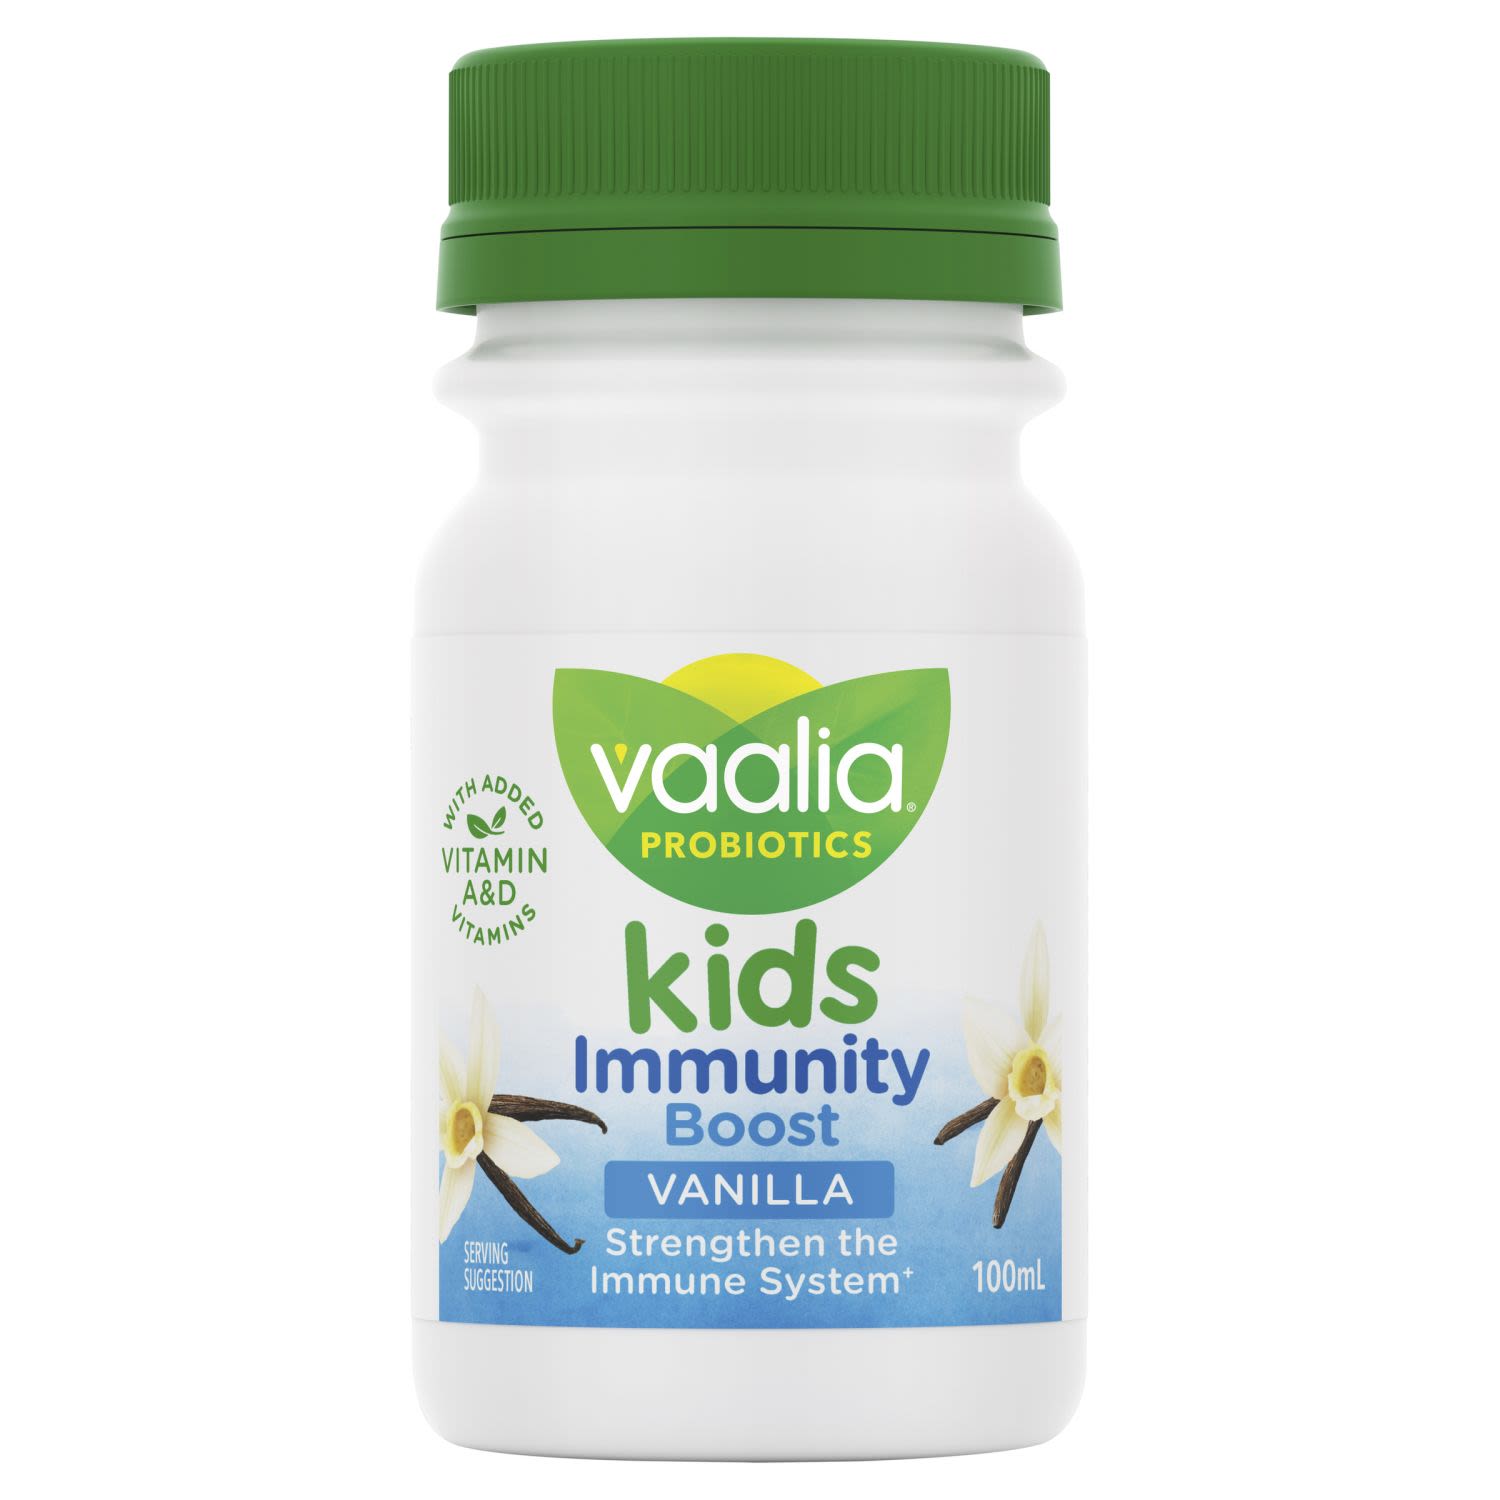 Vaalia Probiotic Kids Immunity Boost Vanilla, 100 Gram